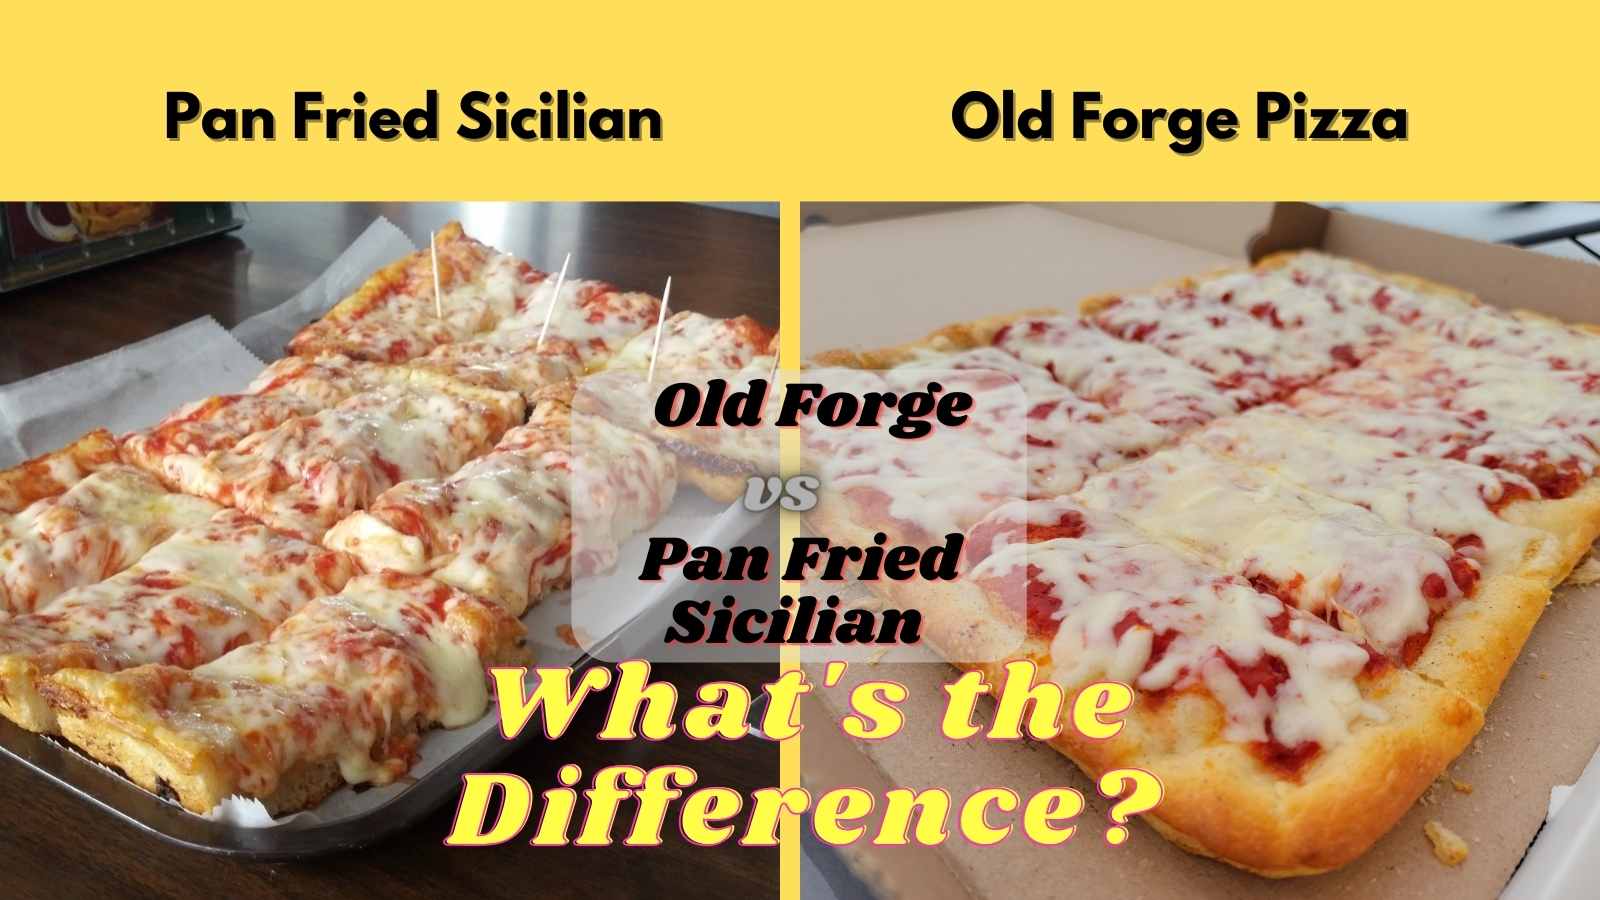 Pizza Siciliana, round pizza with light crispy crust